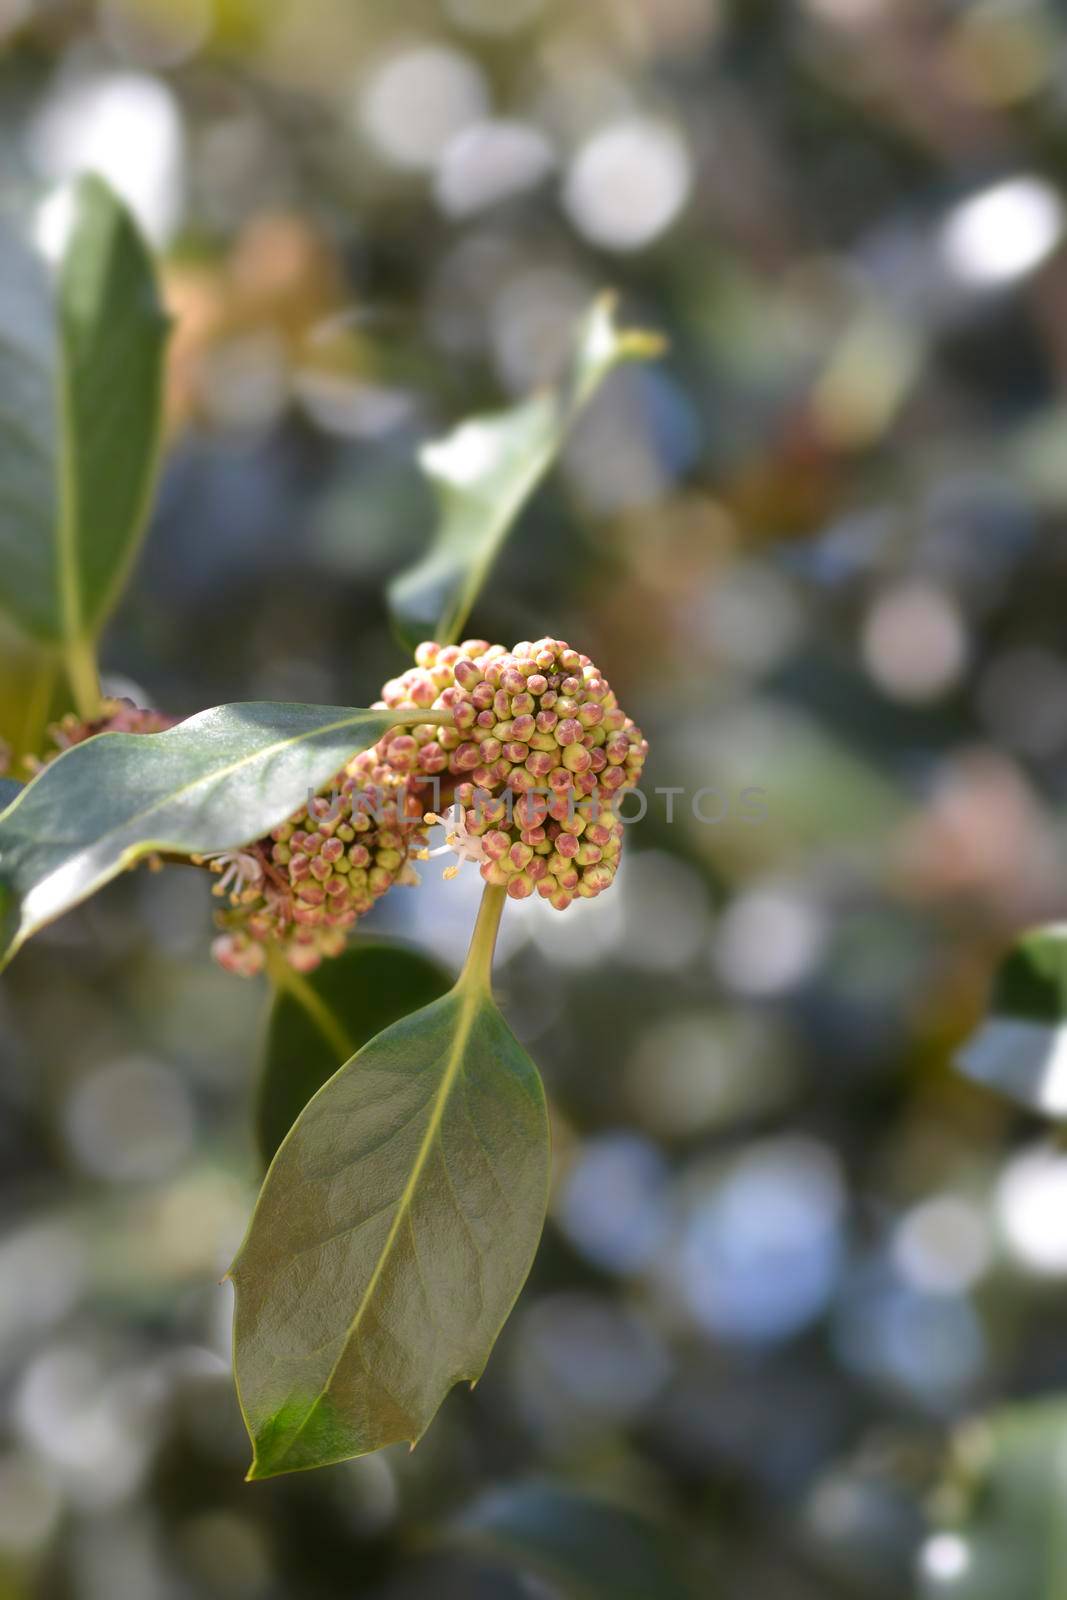 Common Holly flower buds - Latin name - Ilex aquifolium